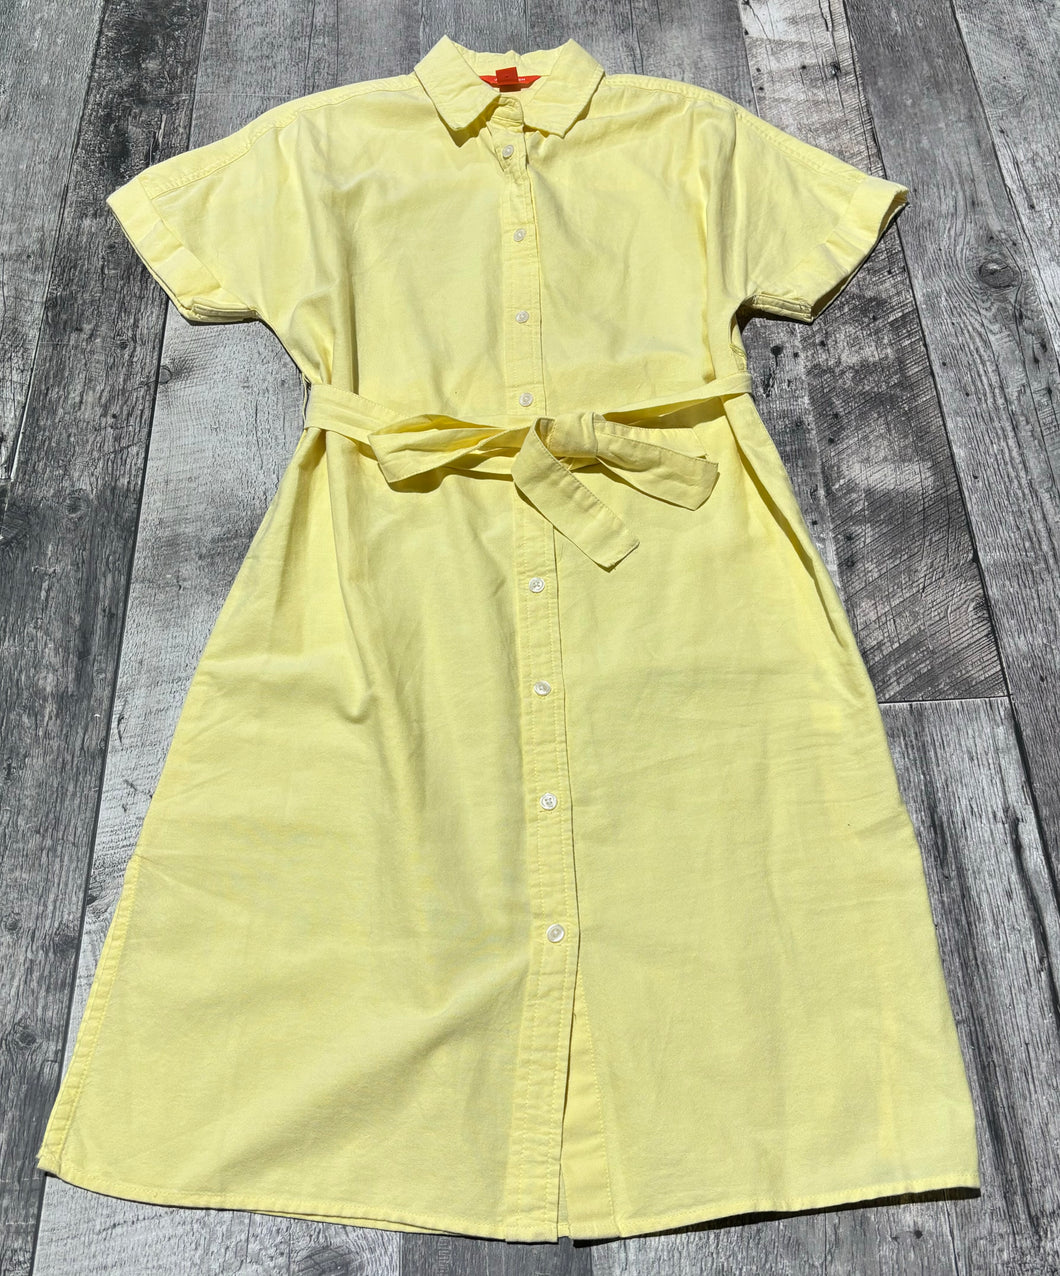 Joe Fresh yellow dress - Hers size S